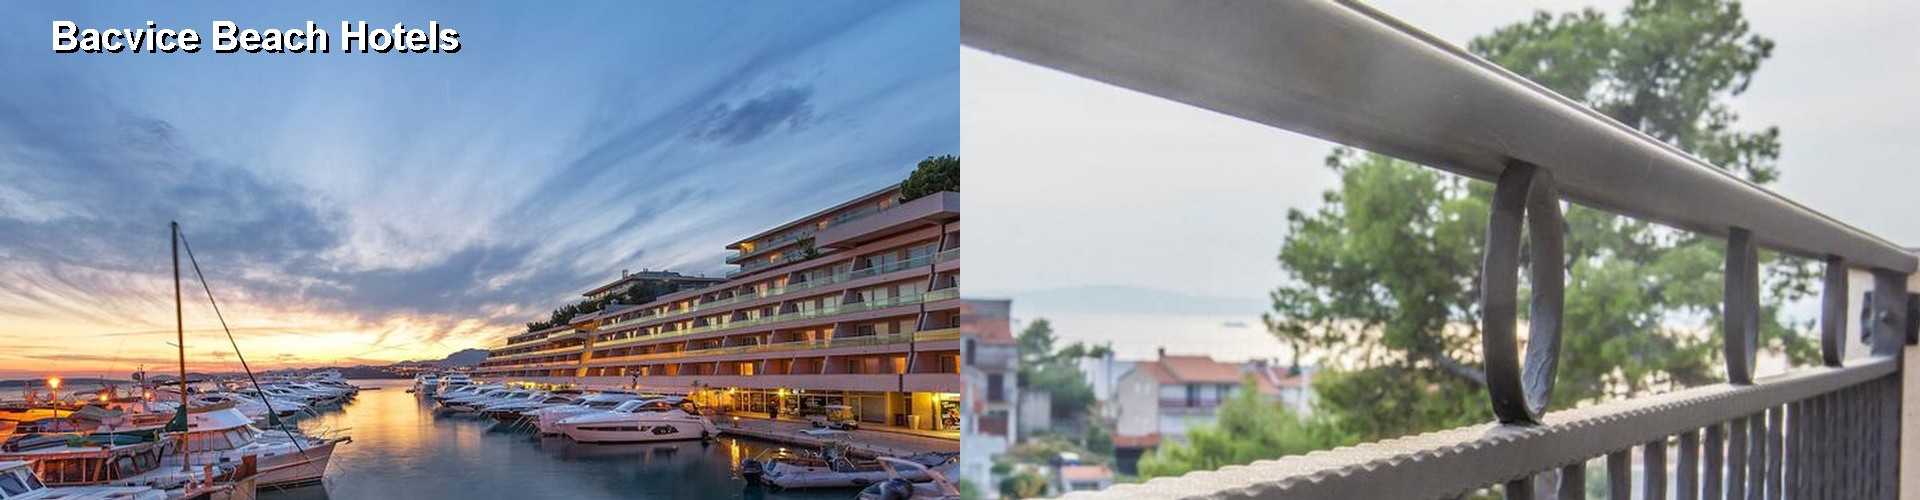 5 Best Hotels near Bacvice Beach